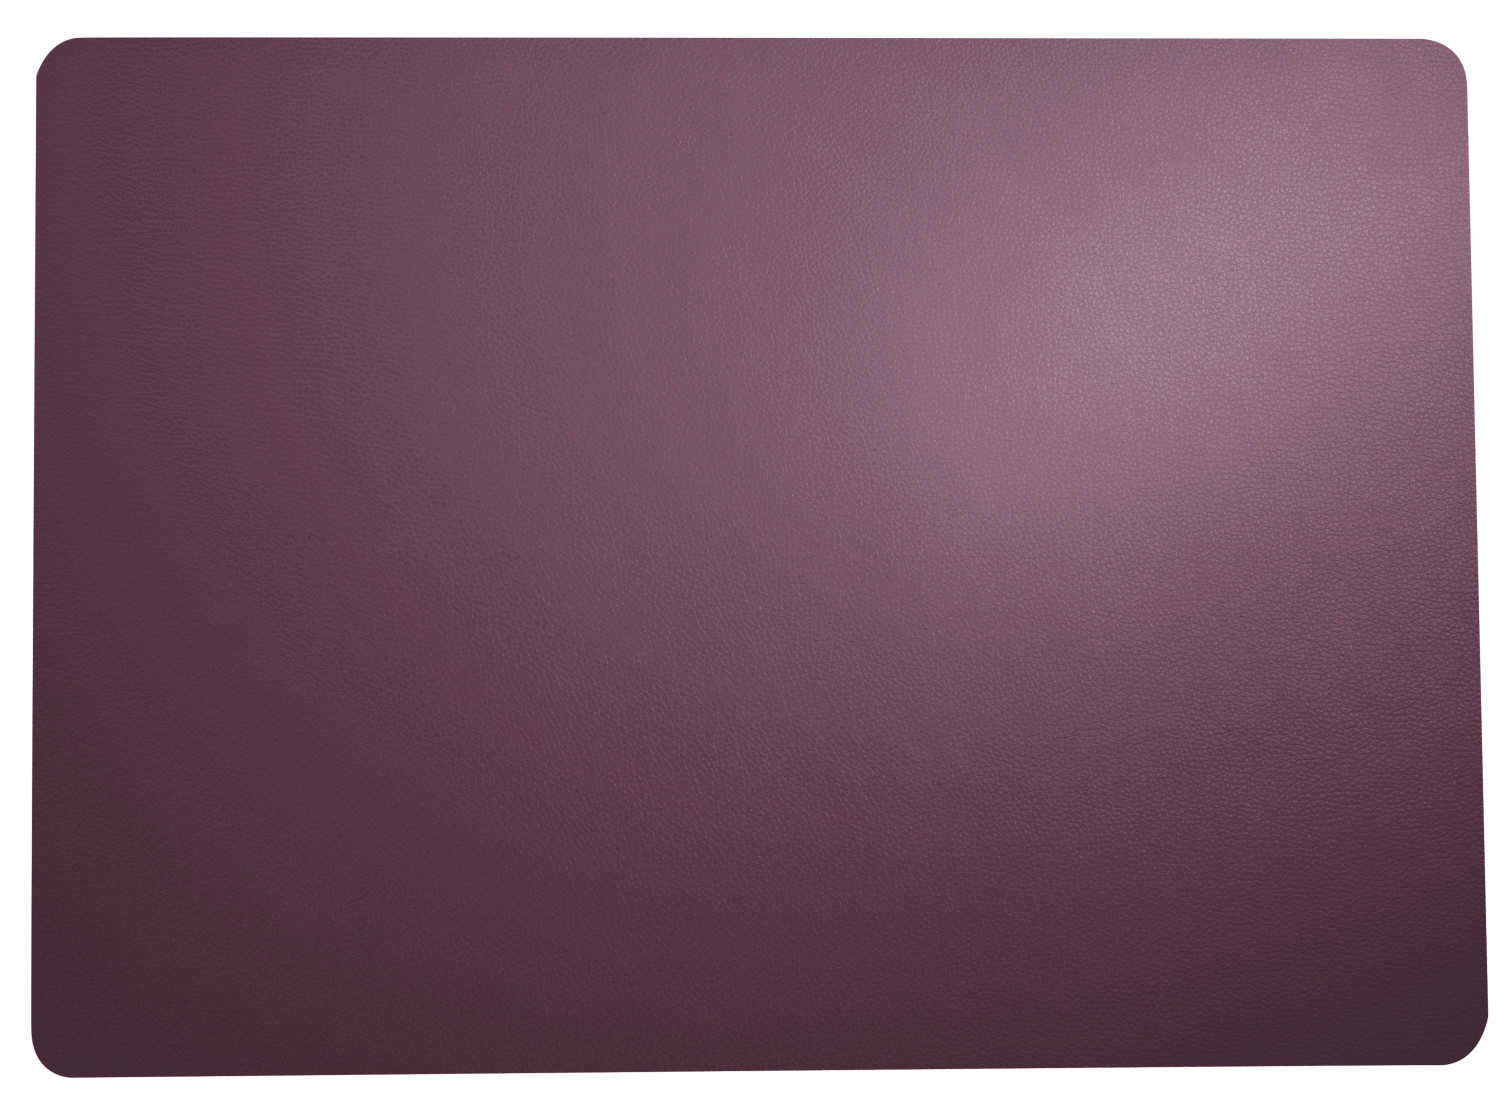  leather optic fine Tischset, plum  Breite: 33cm Länge: 46cm  lila PVC - Lederoptik 